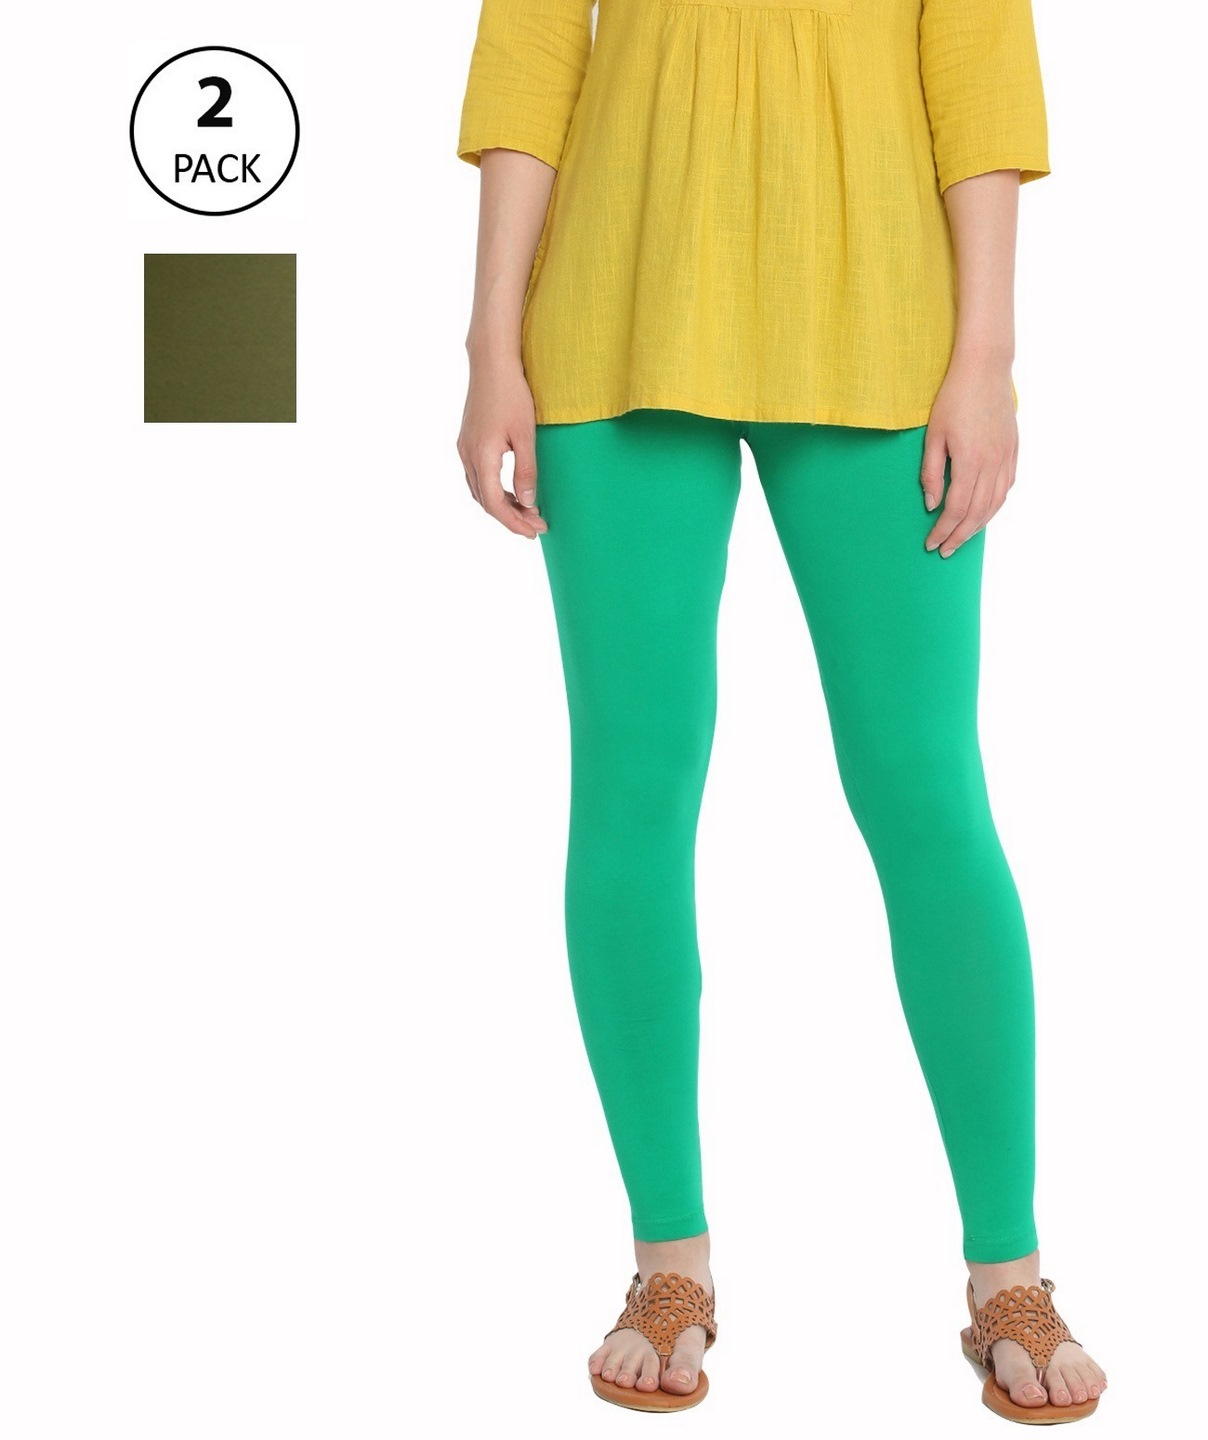 Buy Women Plain Cotton Chudidar Green Color Leggings of Vami_15 at Amazon.in